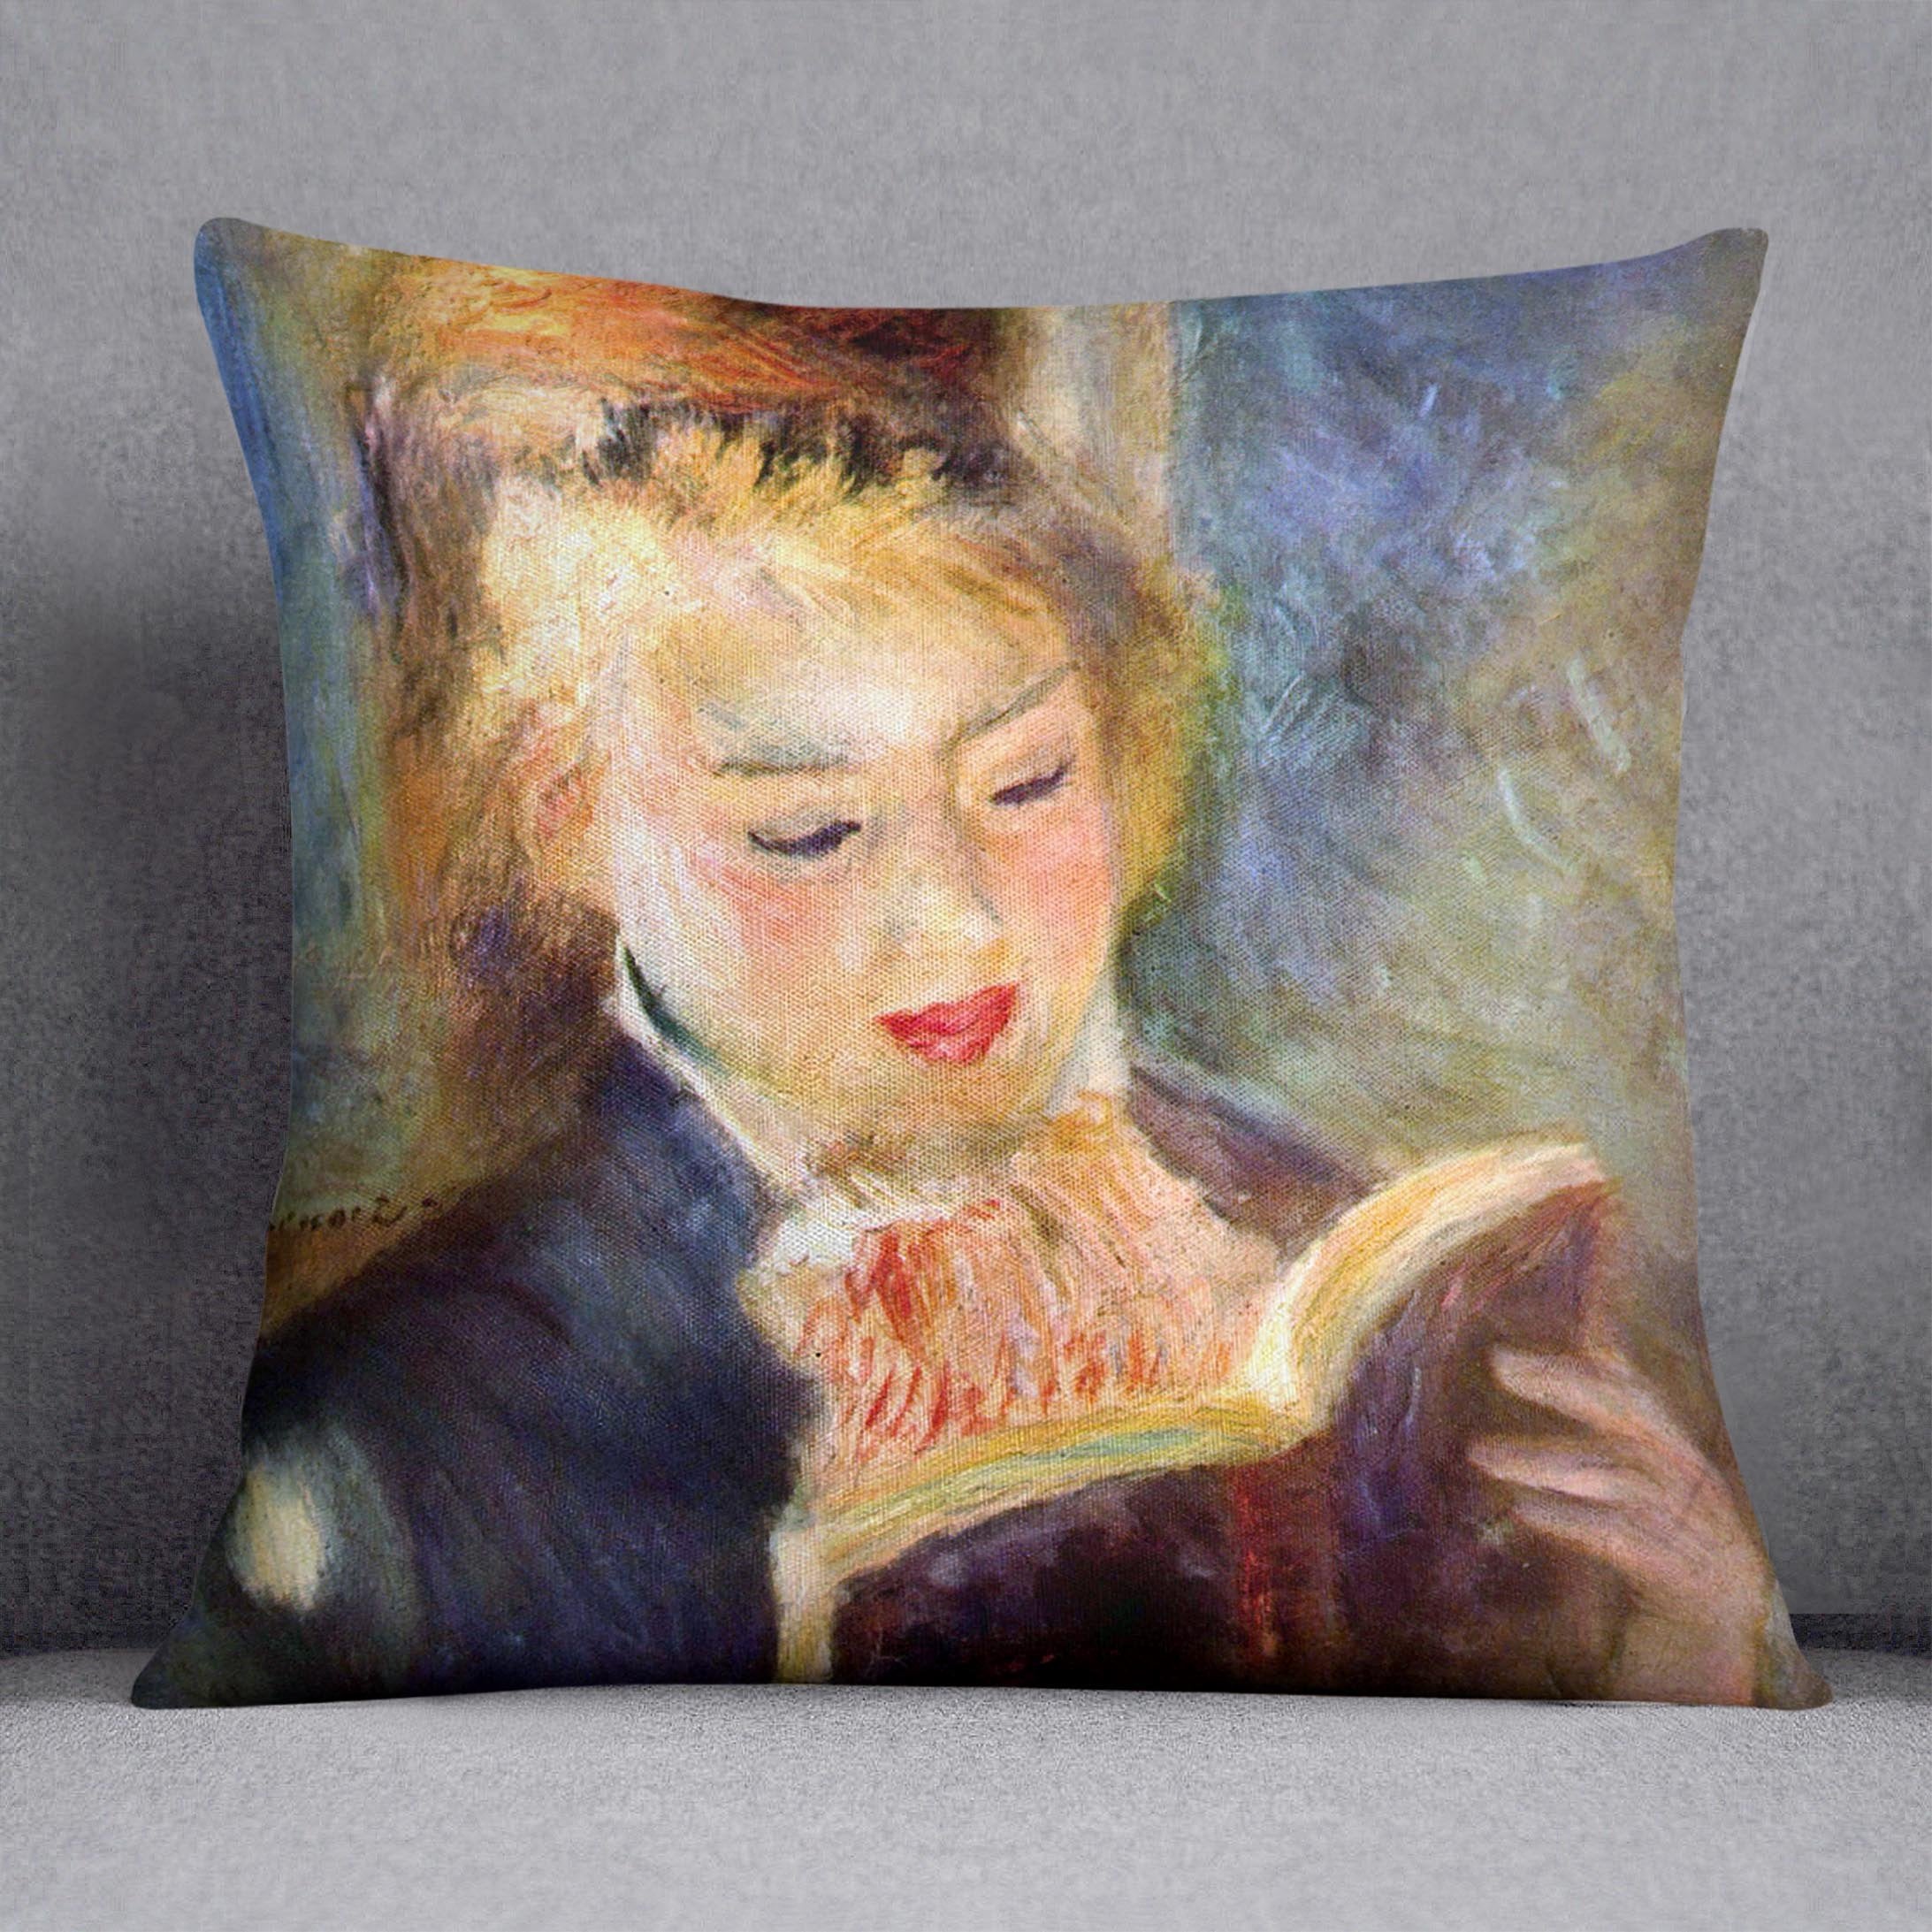 A reading girl1 by Renoir Throw Pillow